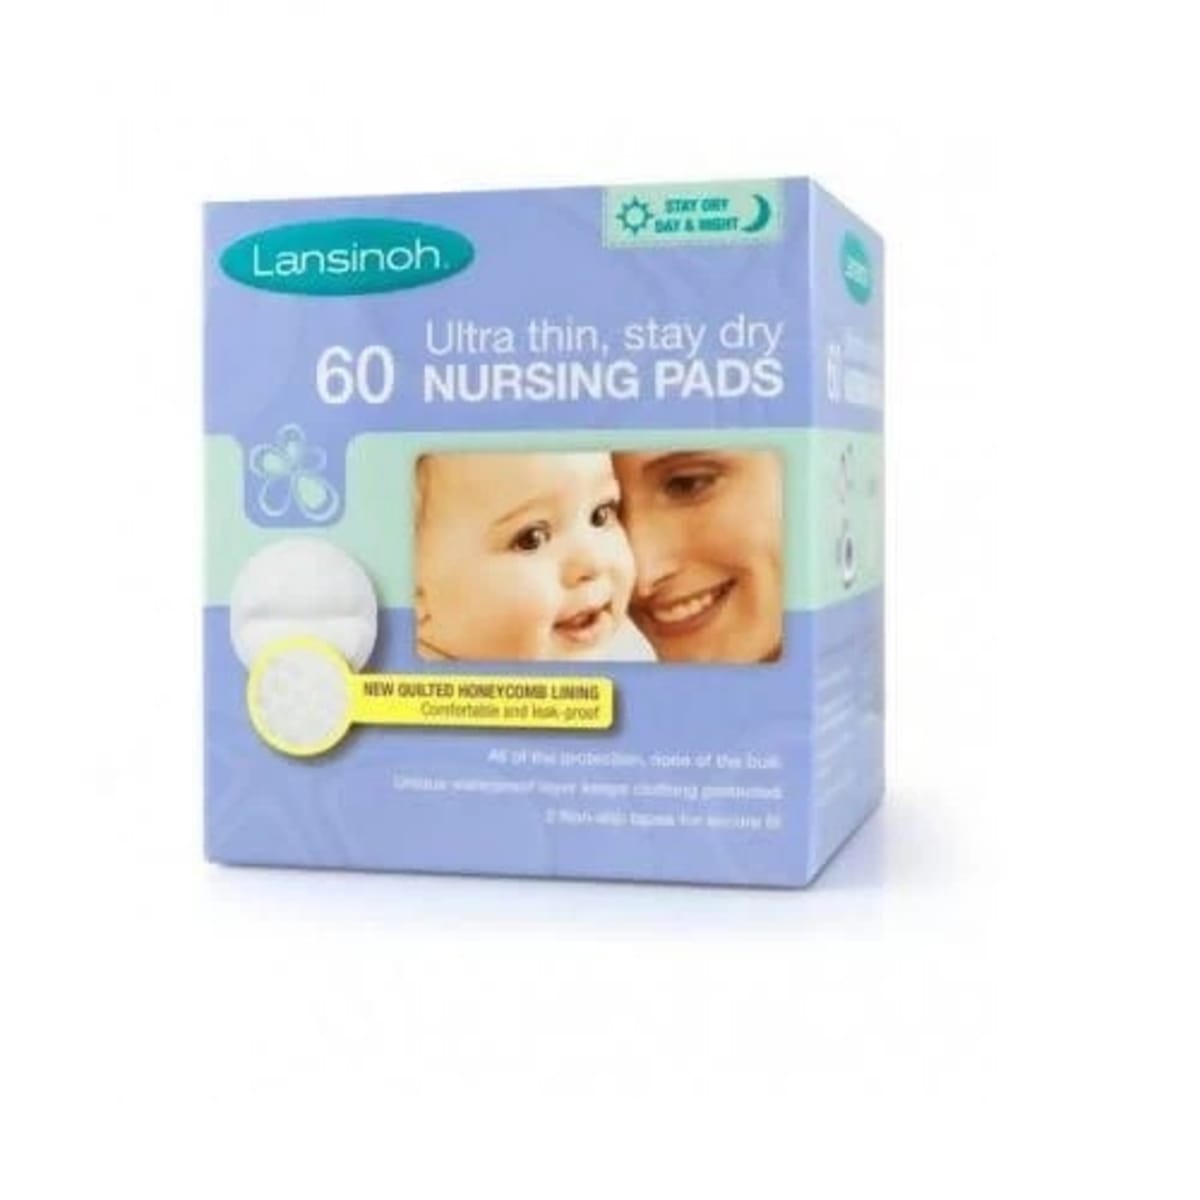 Lansinoh Stay Dry Nursing Pads (60 ct)